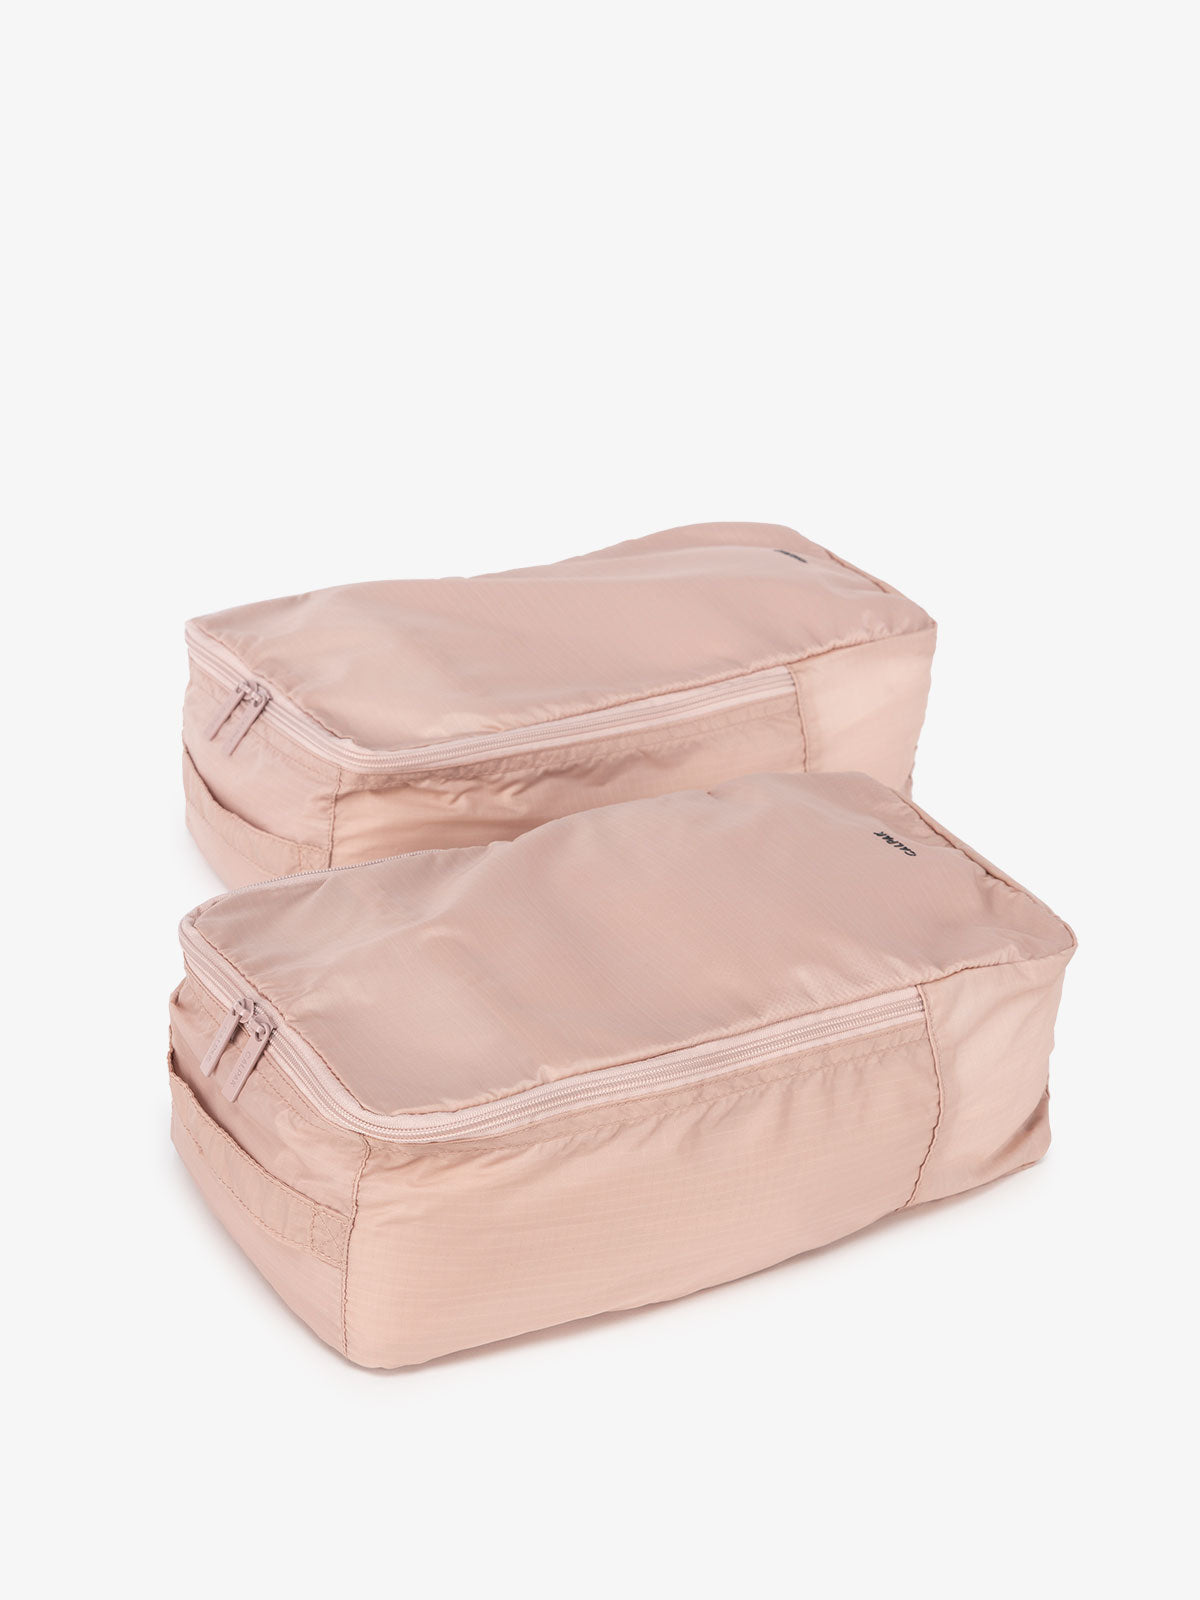 CALPAK Insulated Lunch Bag in Daisy